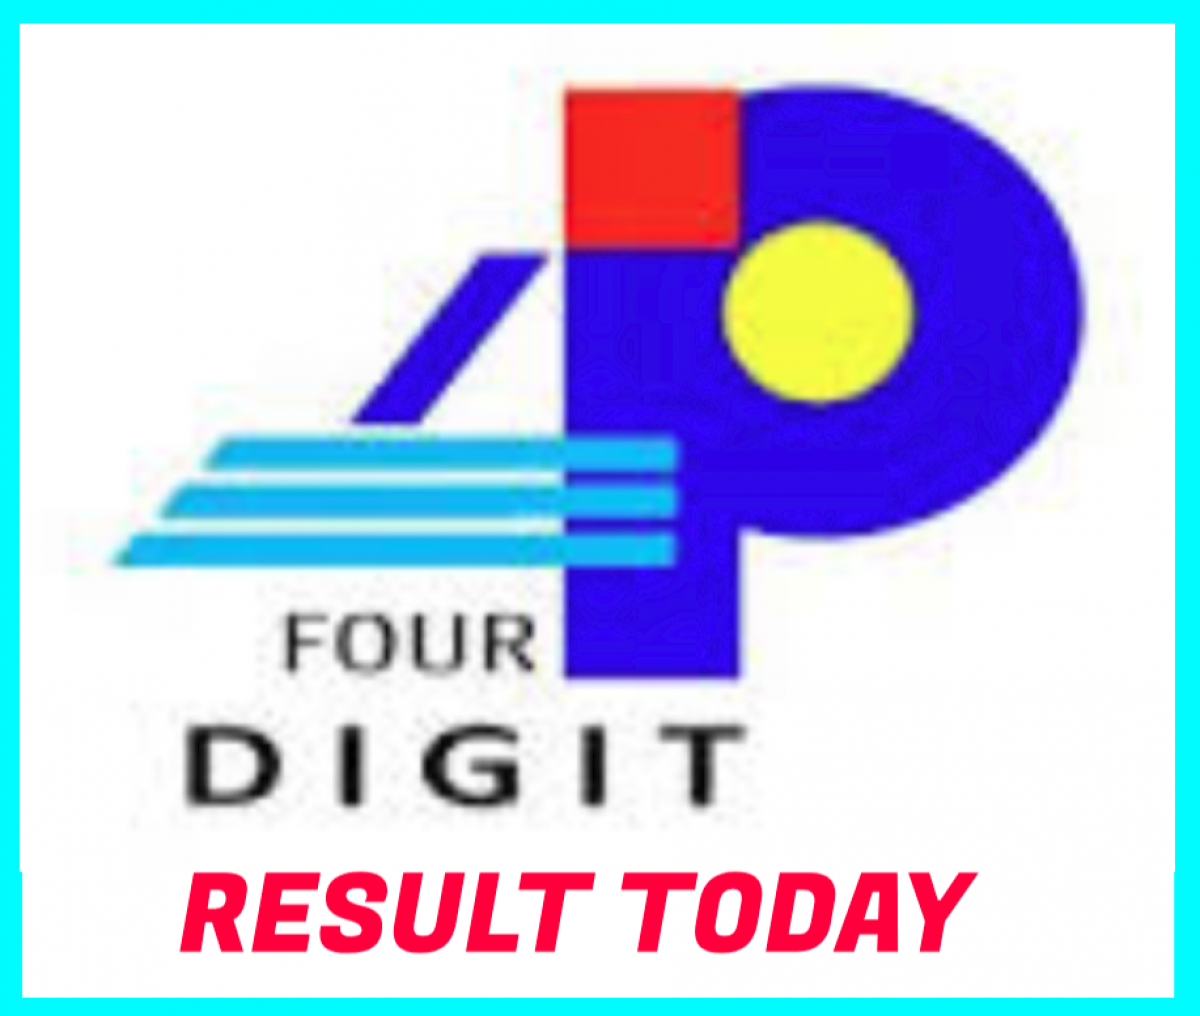 pcso lotto result june 16 2019